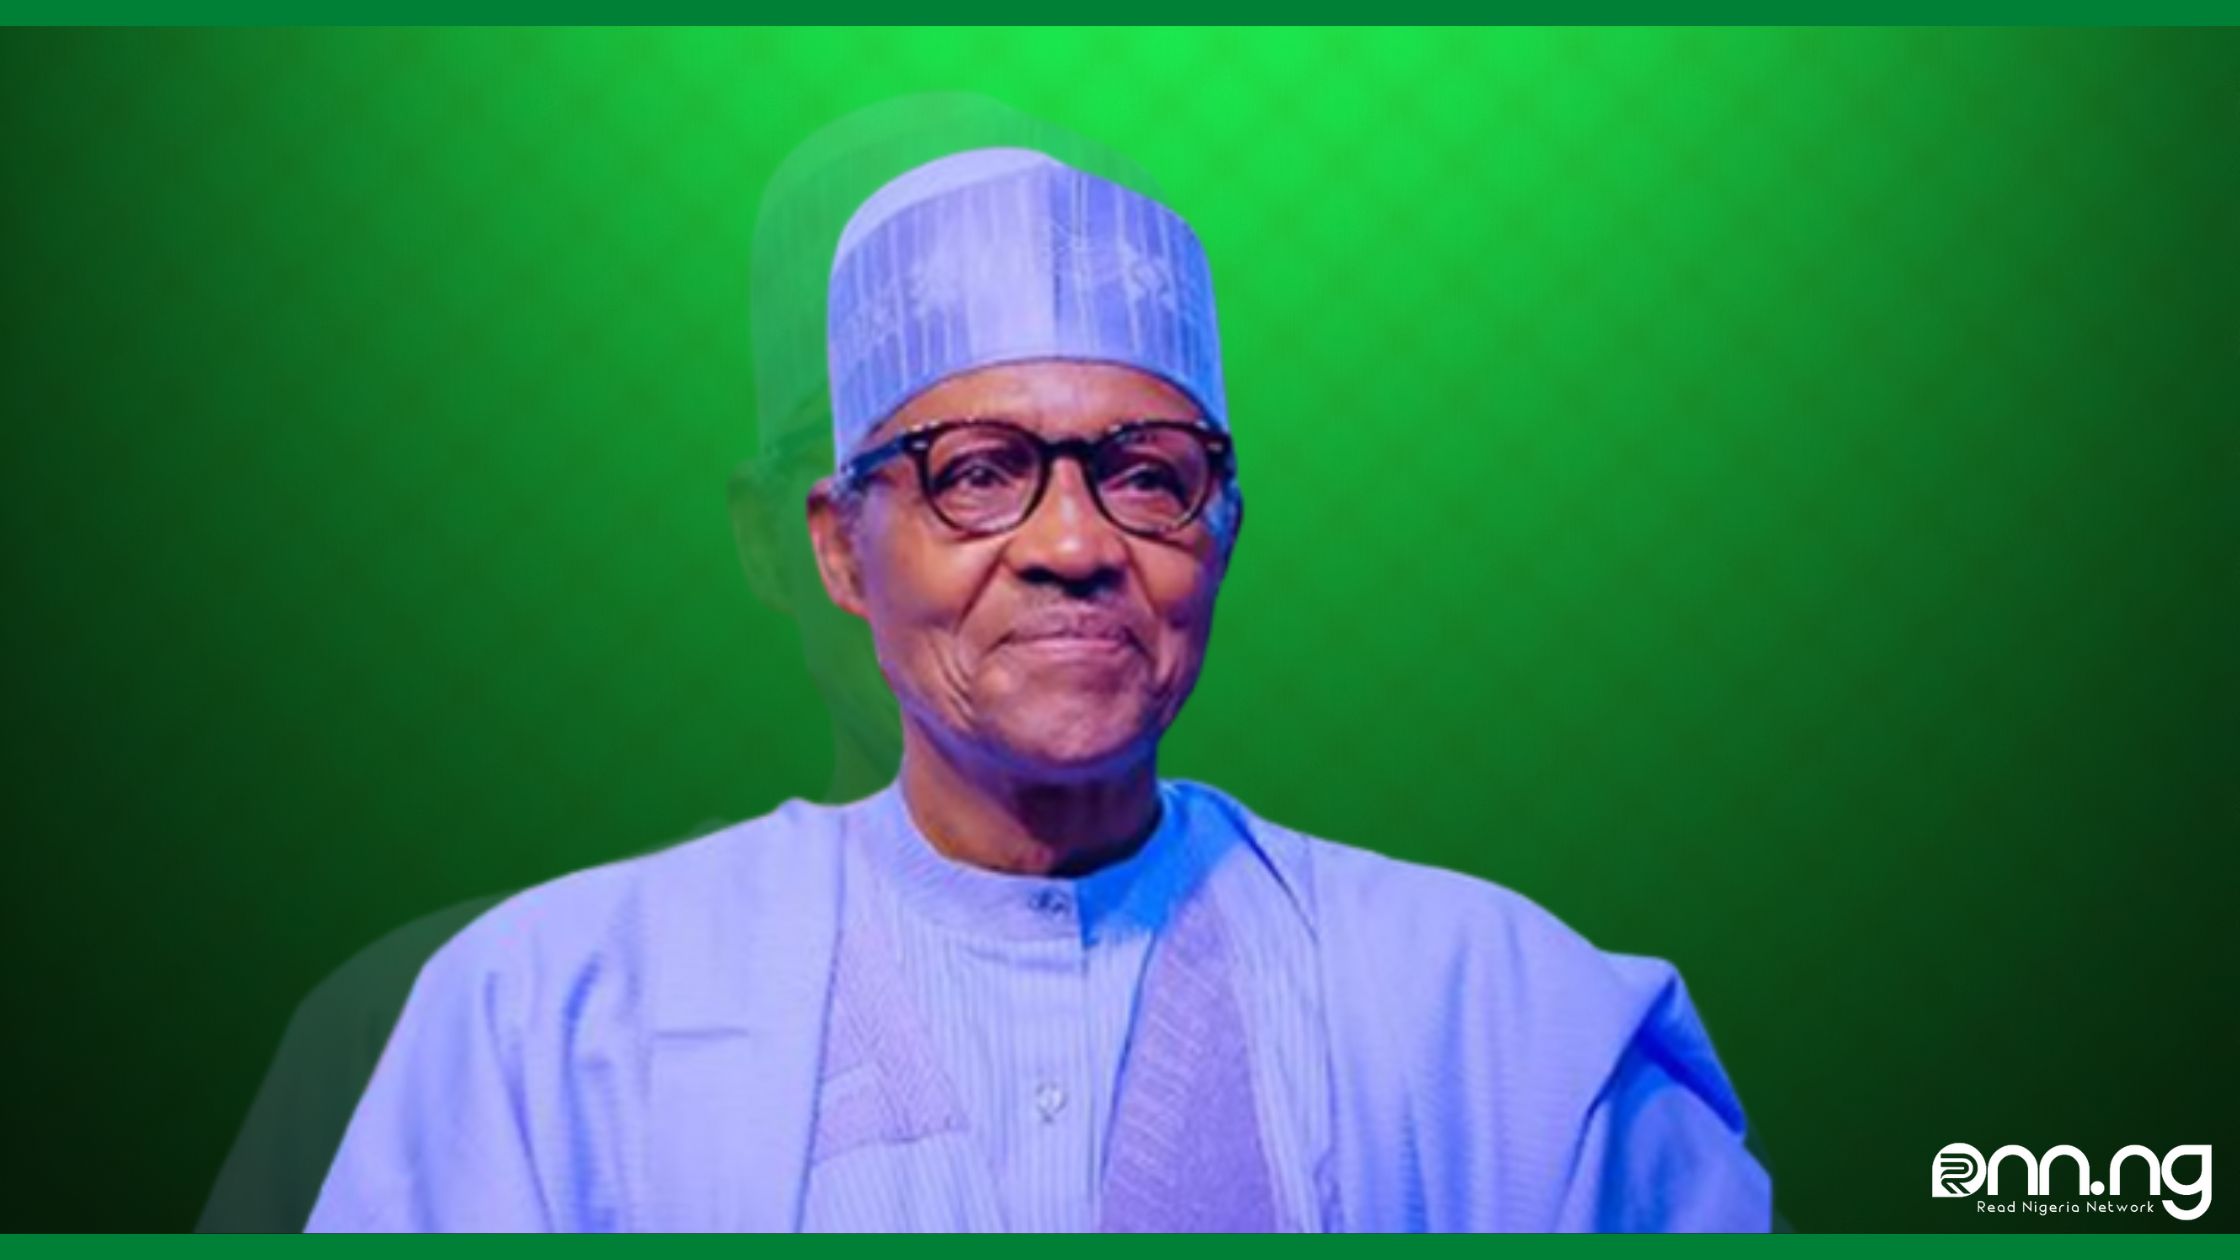 Be Alert, Don’t Panic Over Terror Alarm - Buhari tells Nigerians